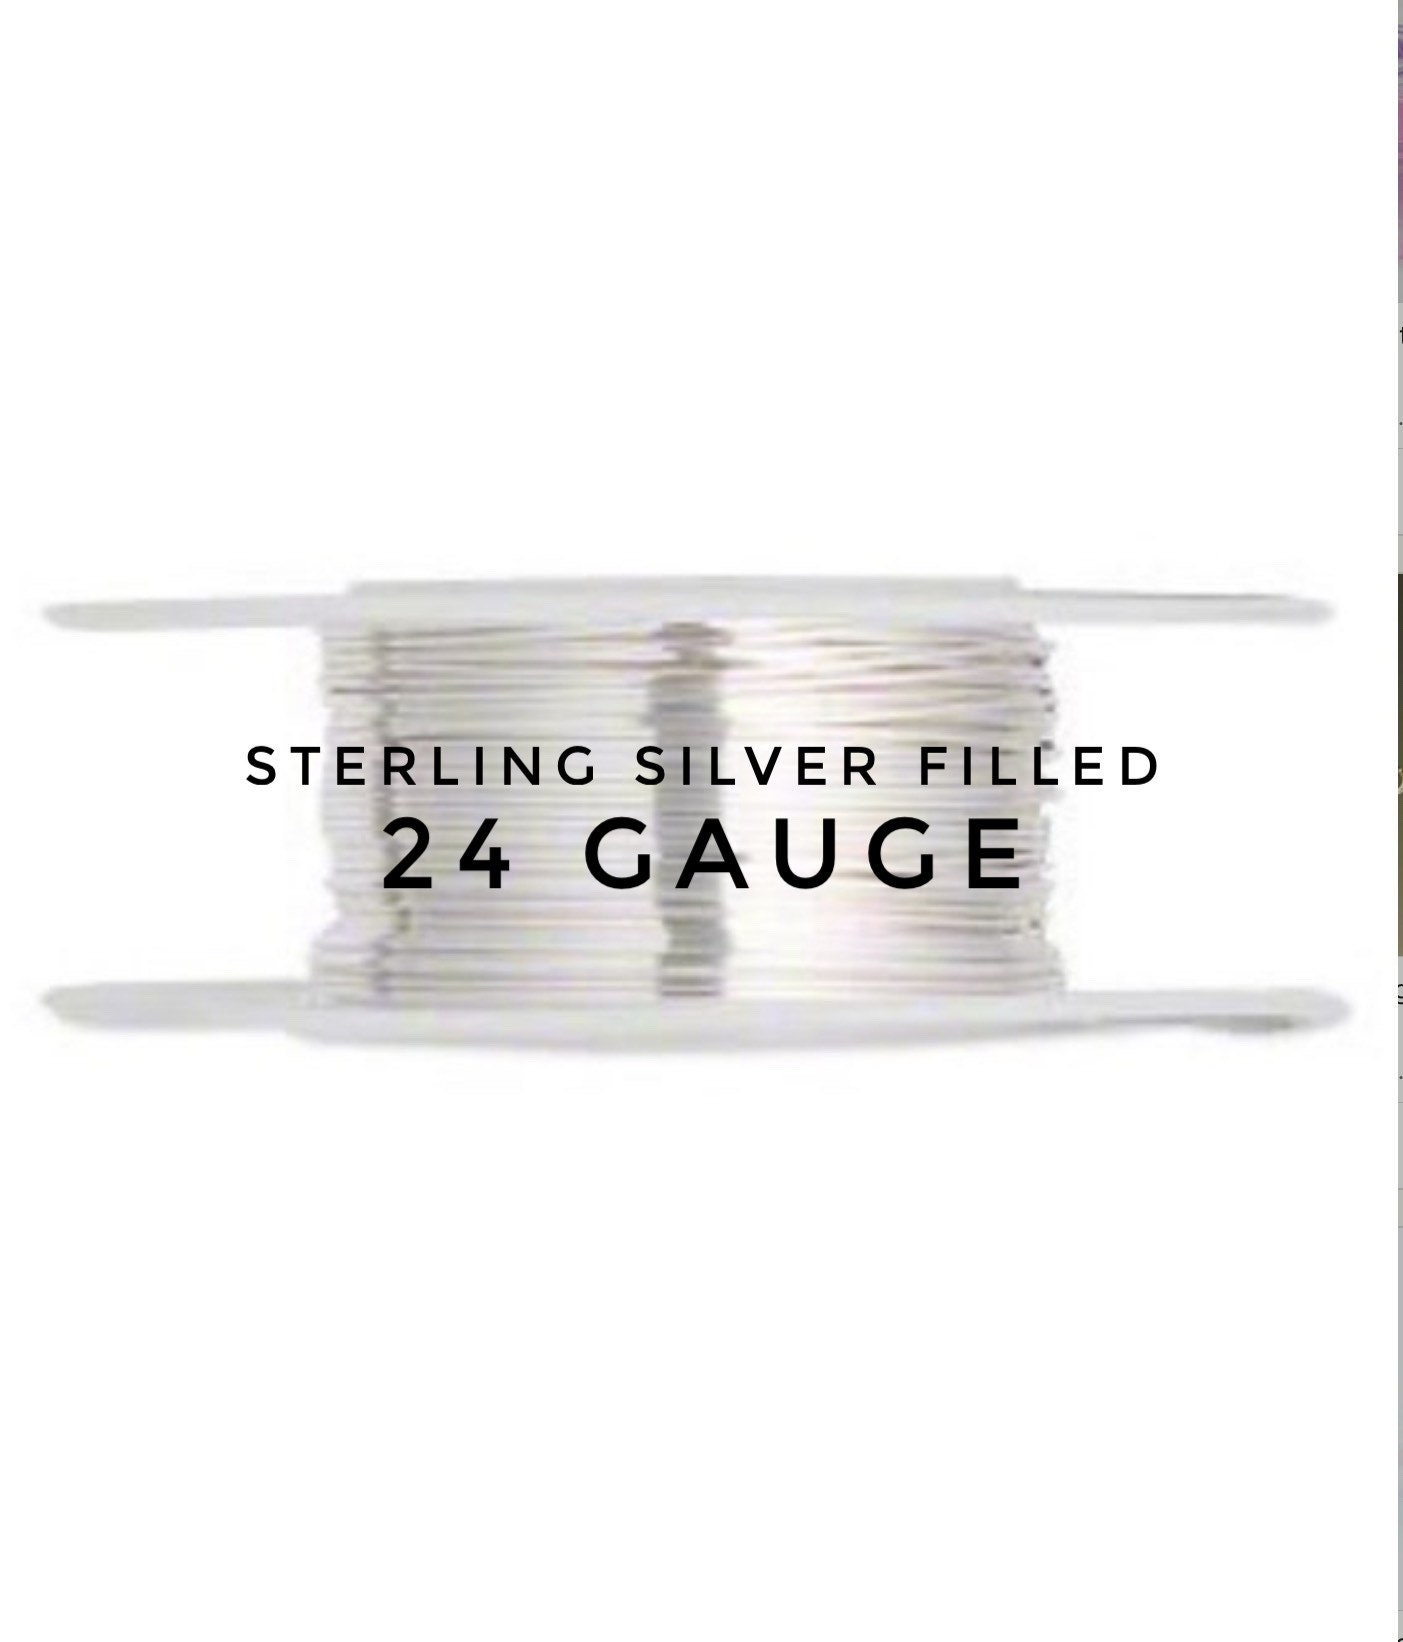 24 Gauge Round Sterling Silver Dead Soft Metal Wire - 48 Feet